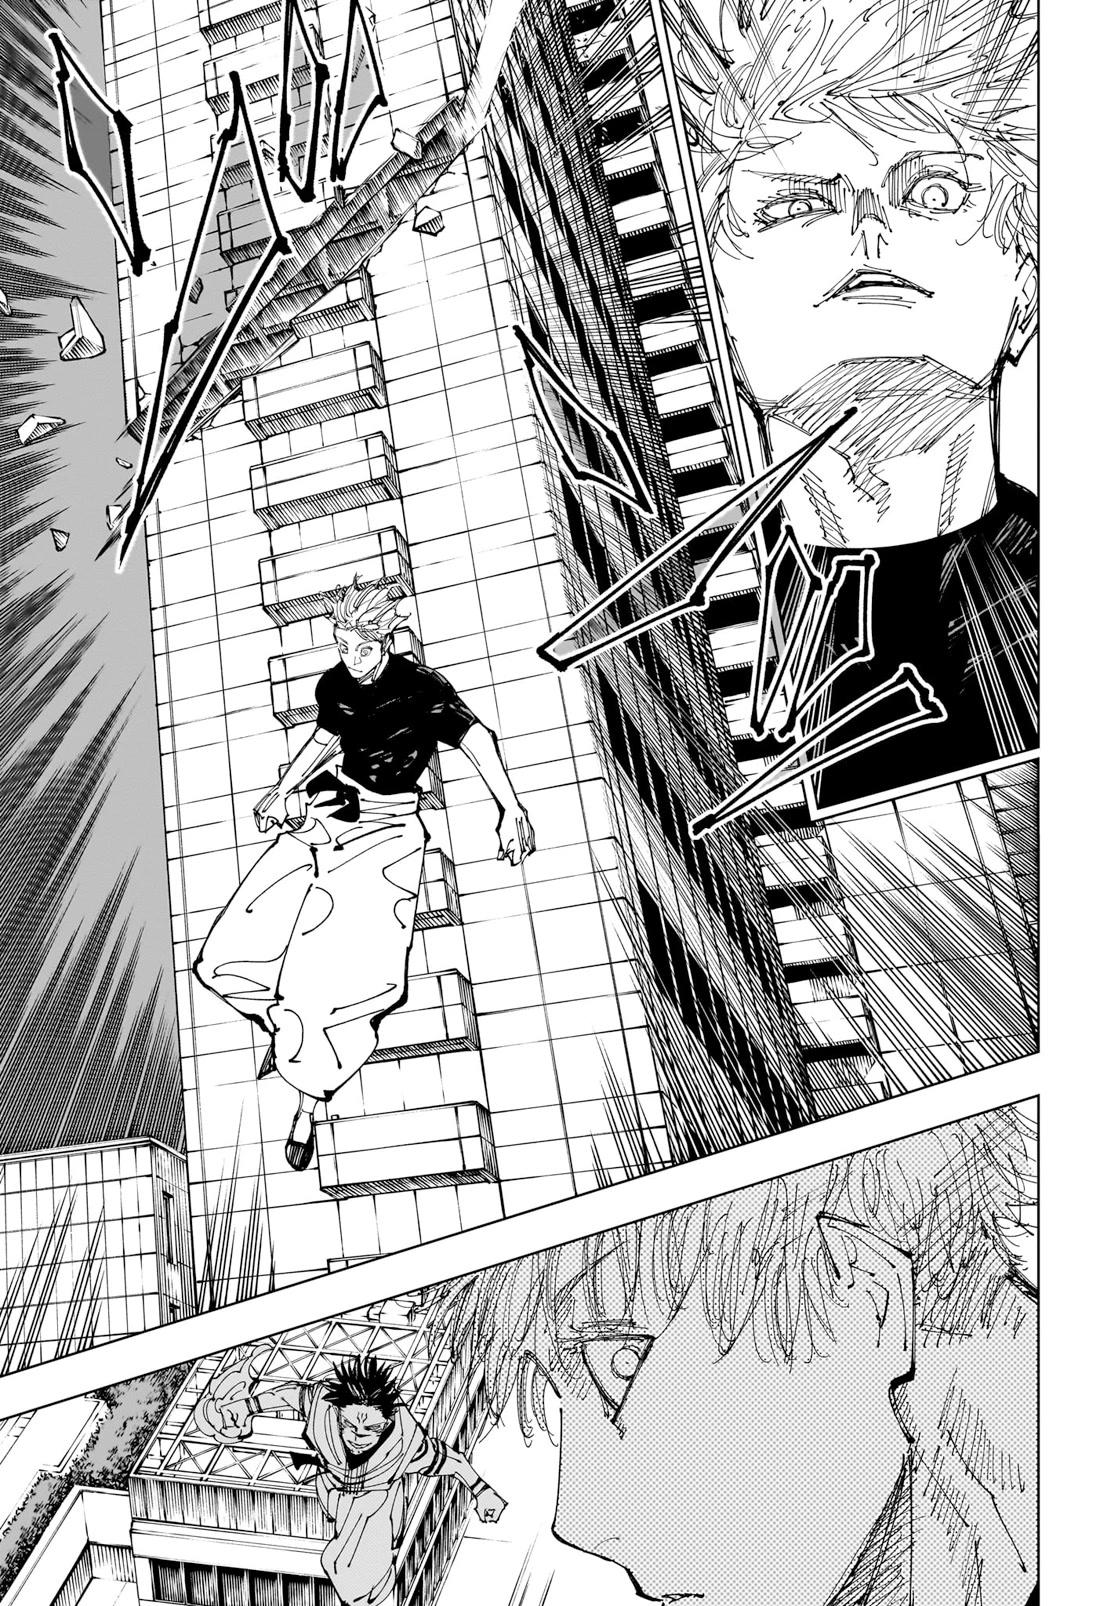 Jujutsu Kaisen Chapter 224: The Decisive Battle In The Uninhabited, Demon-Infested Shinjuku ② page 14 - Mangakakalot